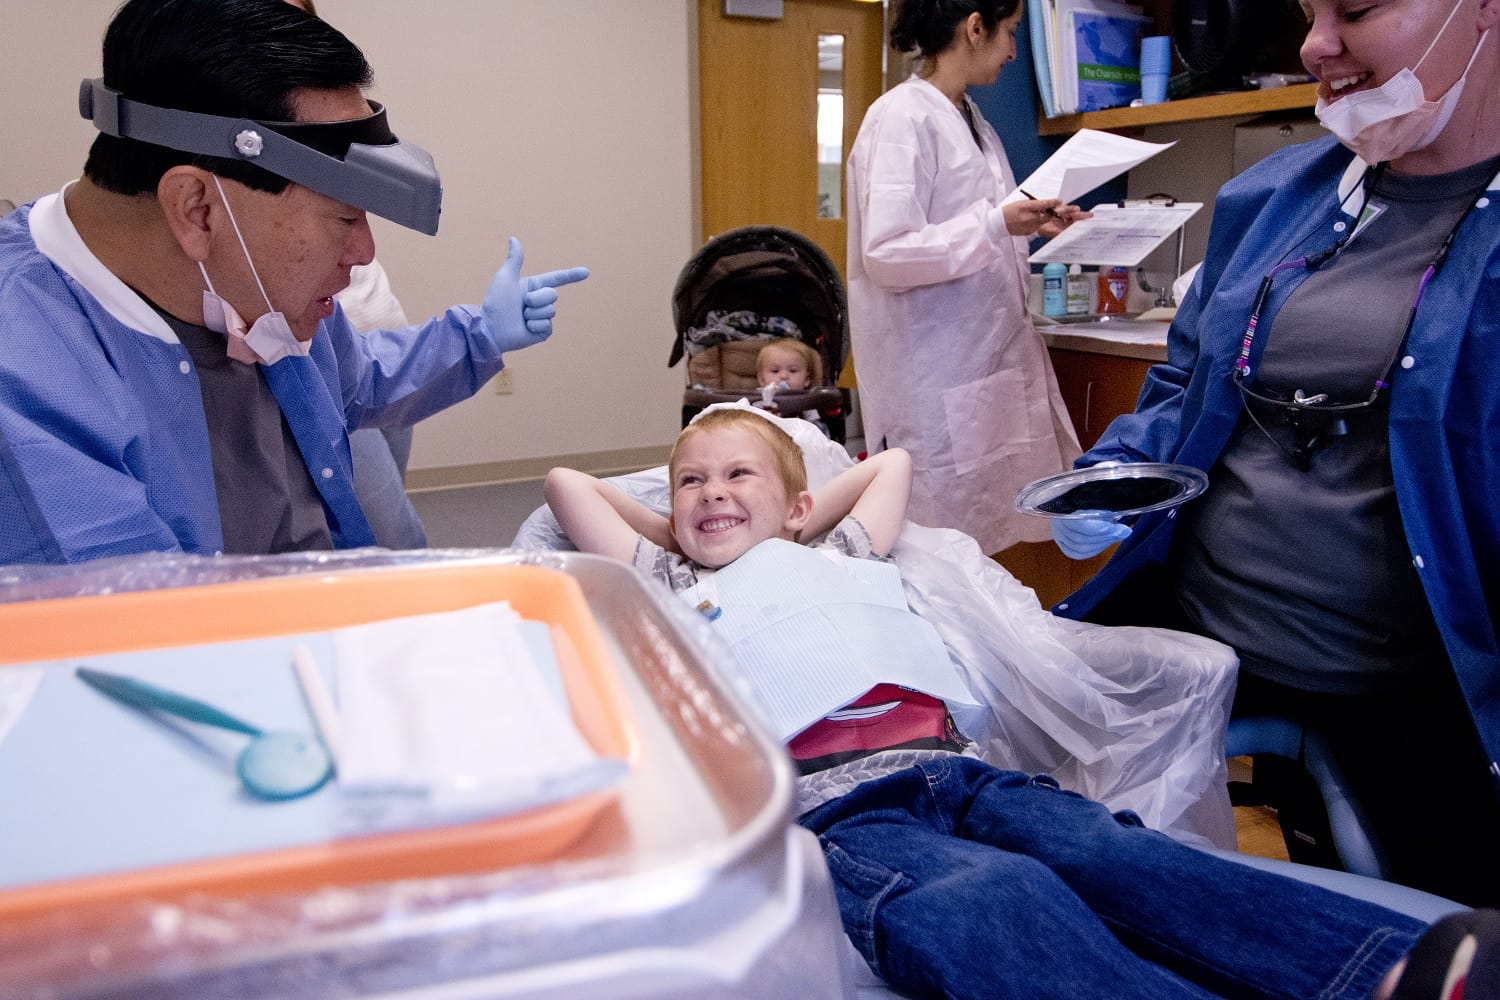 Delta Dental of Illinois Foundation's Dentist By 1 Program Provides Free Dental Care to Illinois Children